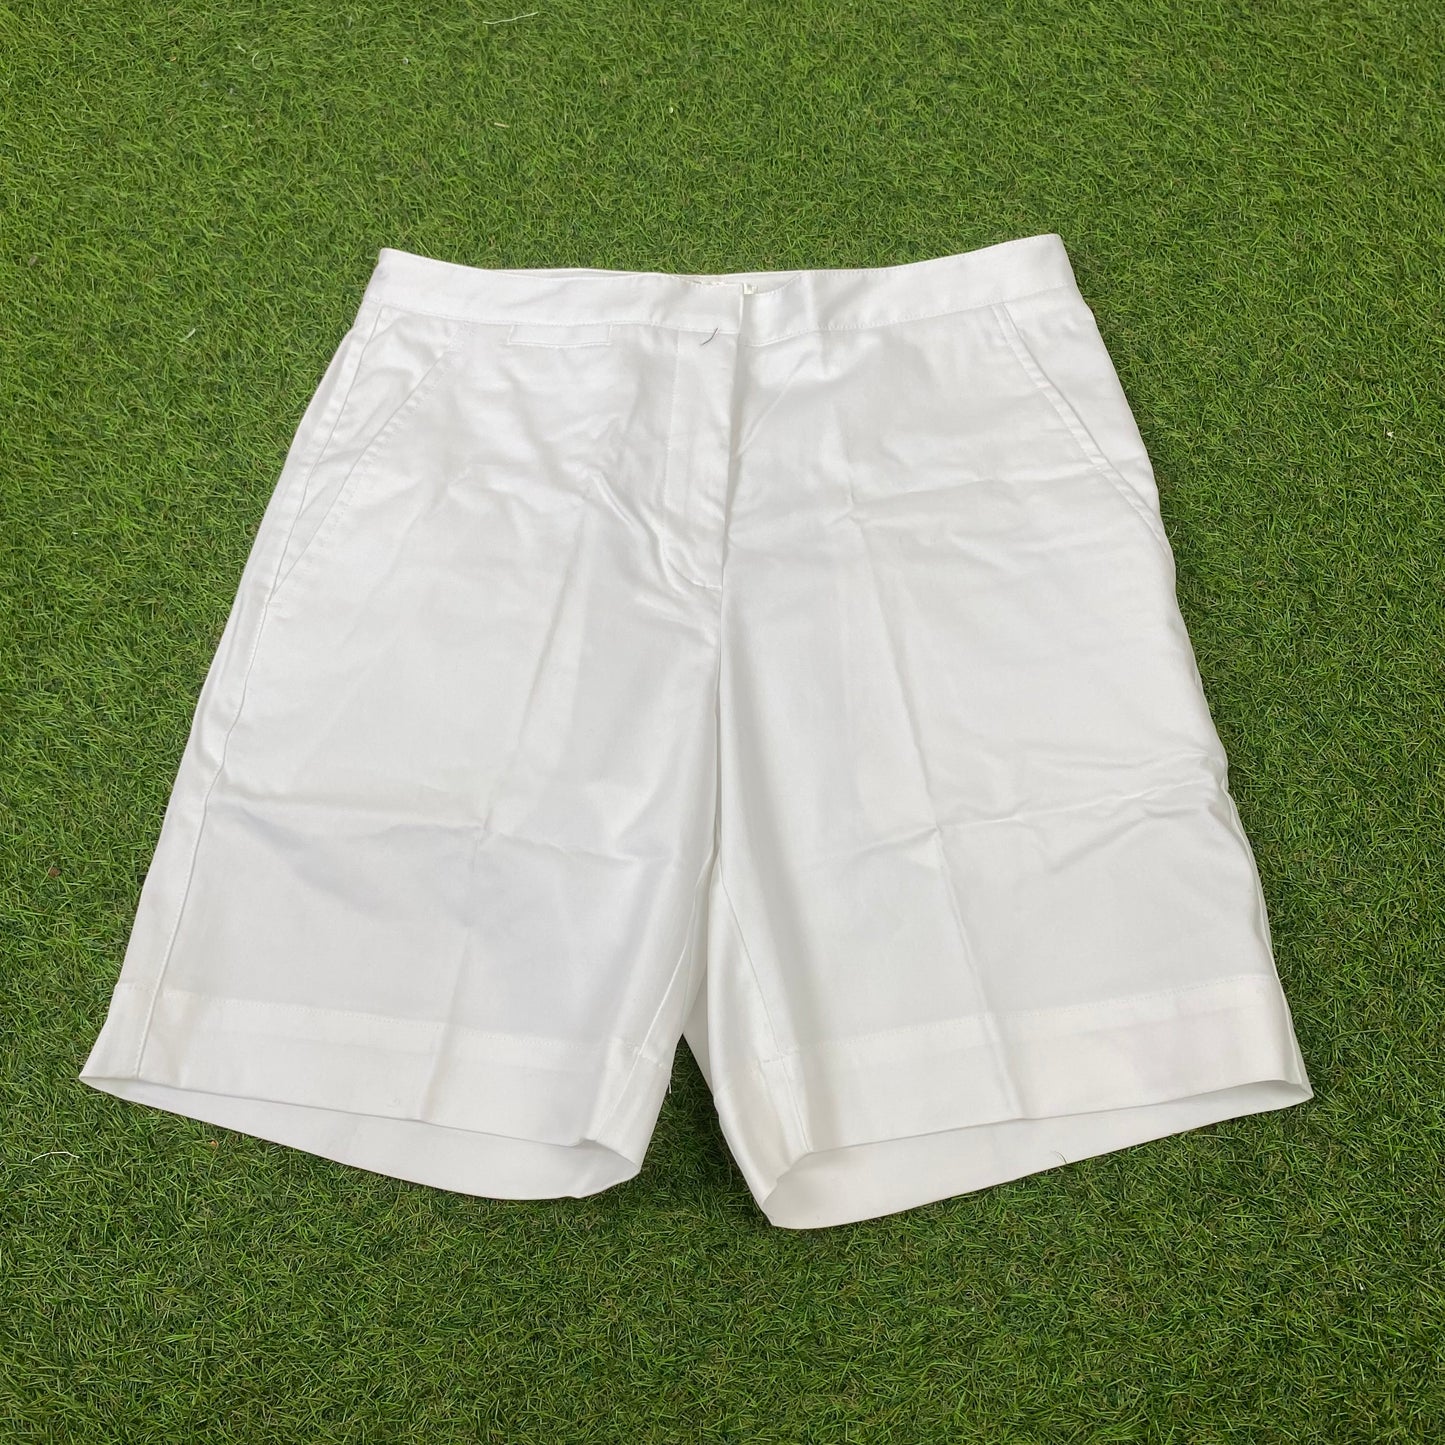 Vintage Nike Golf Shorts White Small